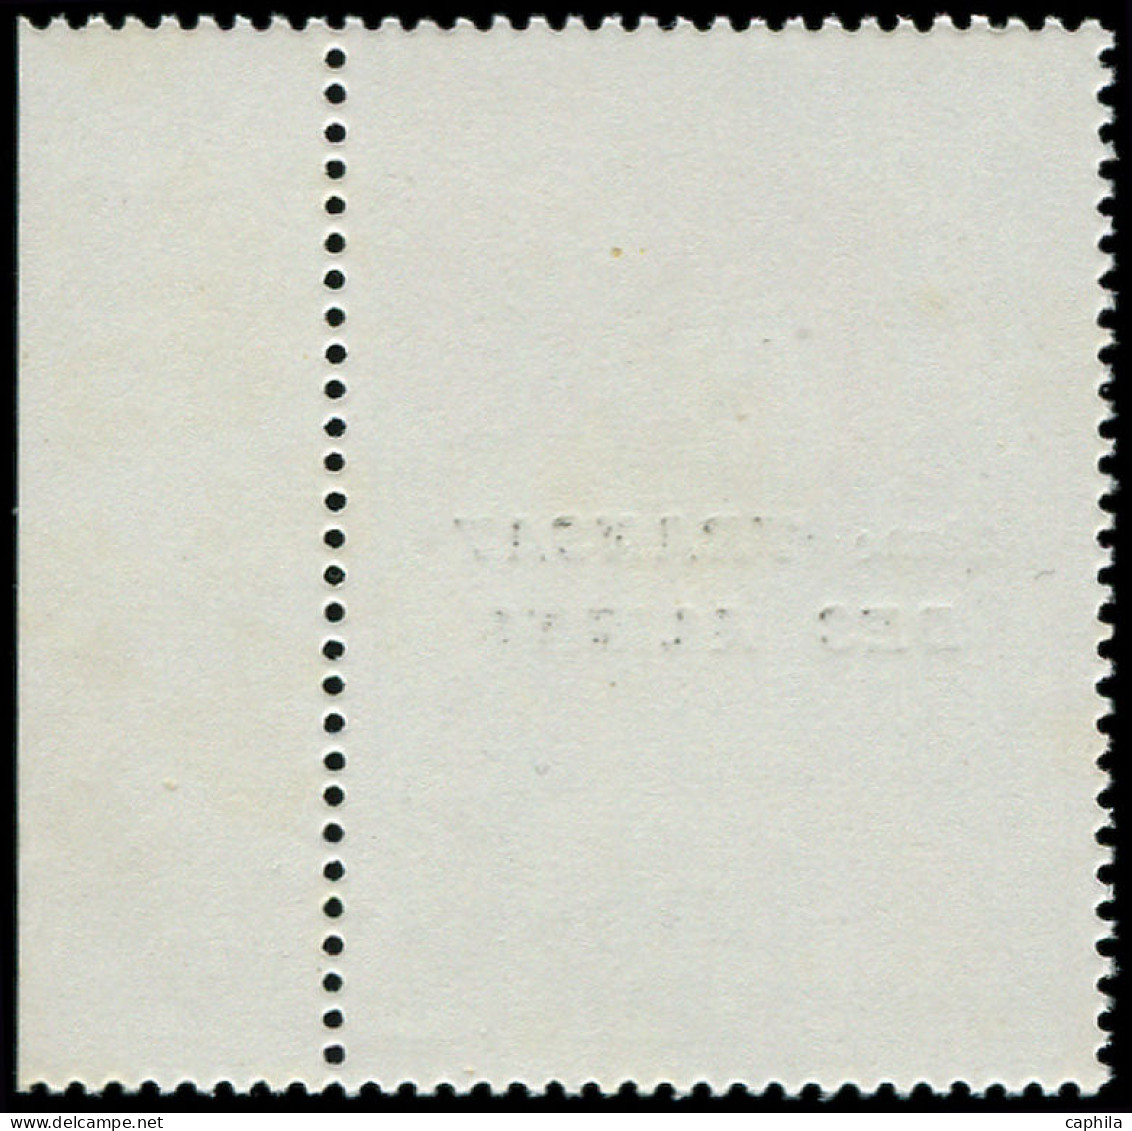 ** MAROC - Poste - 976A, Bdf: Transat Des Alizés - Unused Stamps